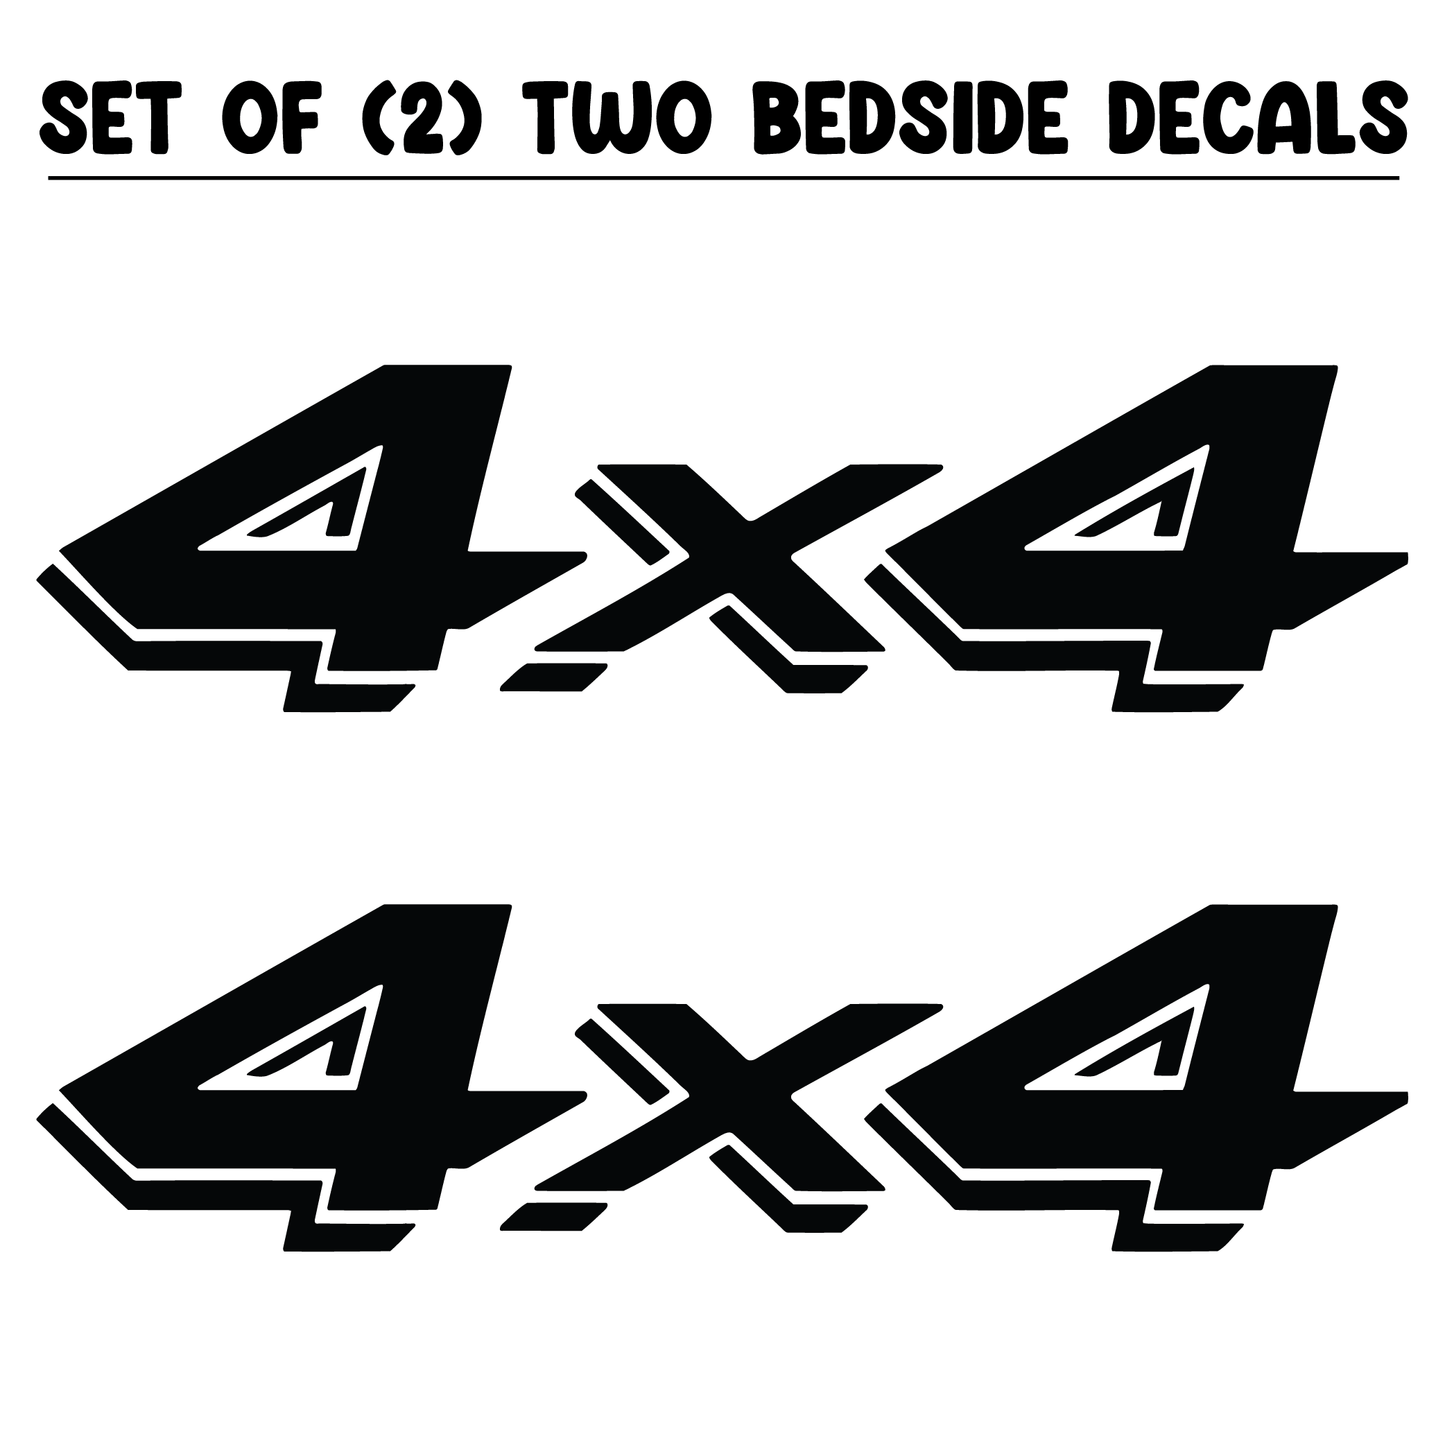 Shop Vinyl Design RAM / Dakota Trucks 4 x 4 Replacement Bedside Decals #04 Vehicle 001 Black Matte Shop Vinyl Design decals stickers